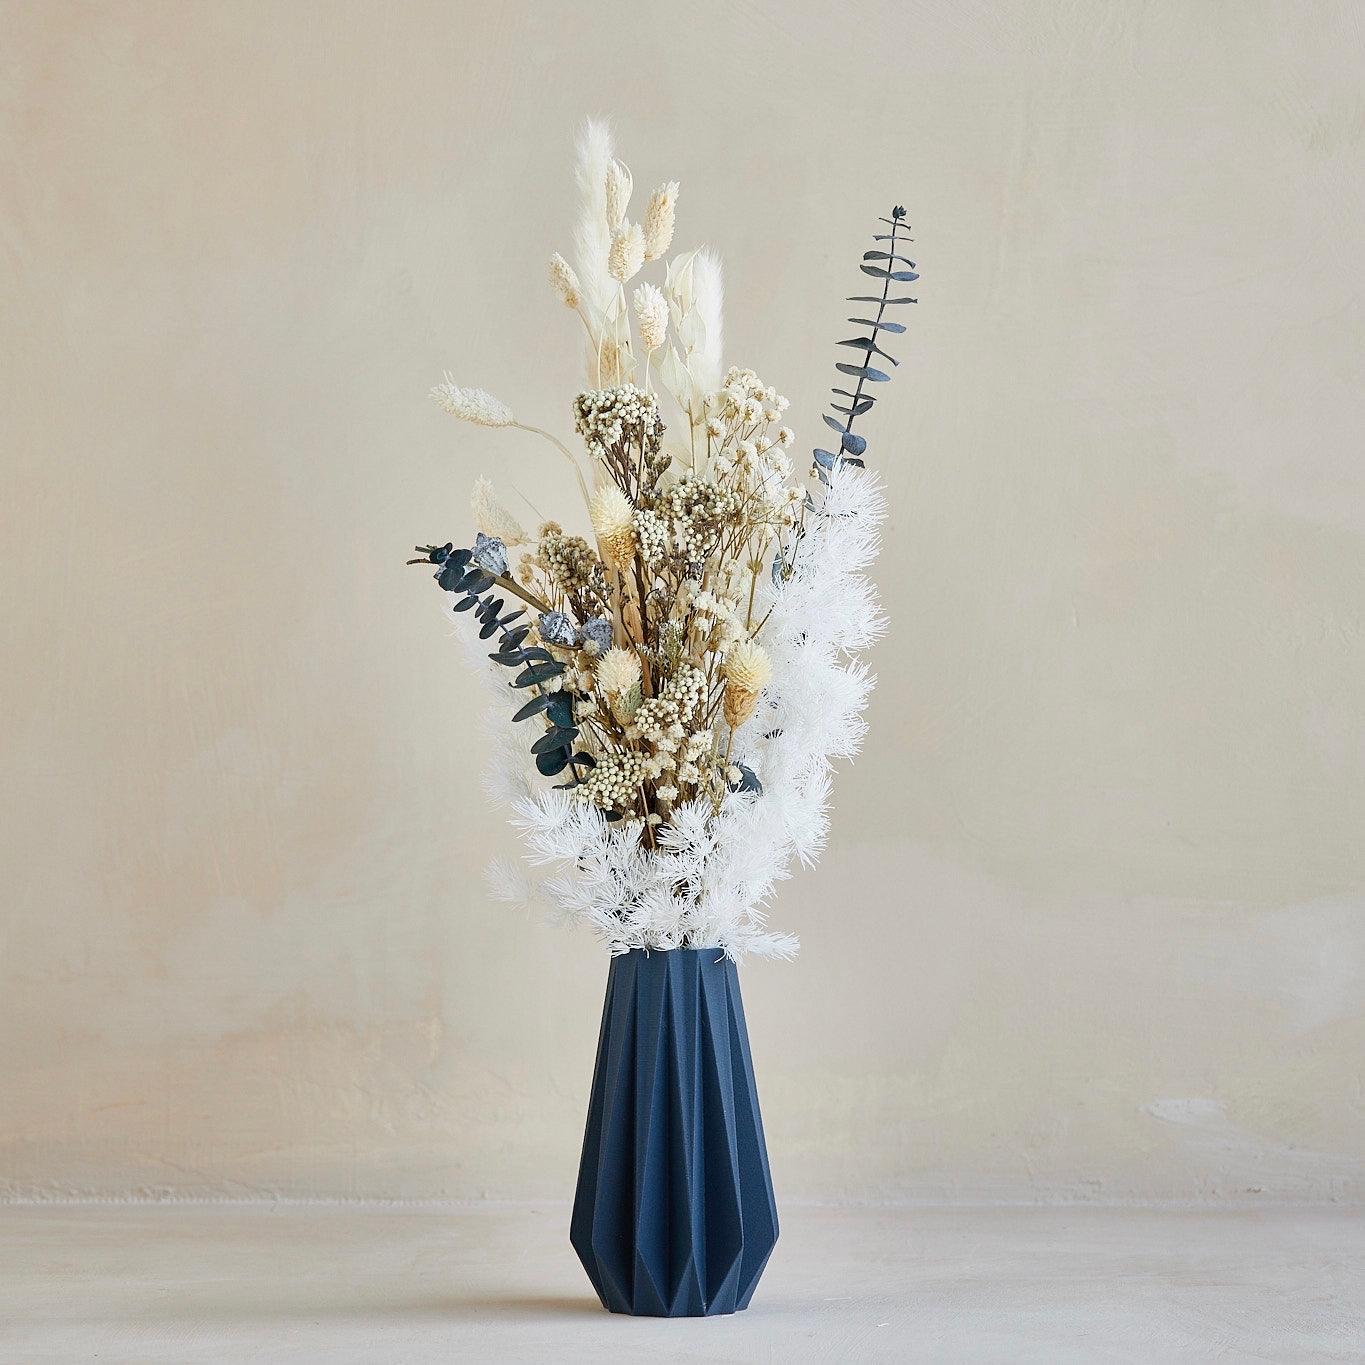 Monochrome Centerpiece + Blue ORIGAMI Vase 6"